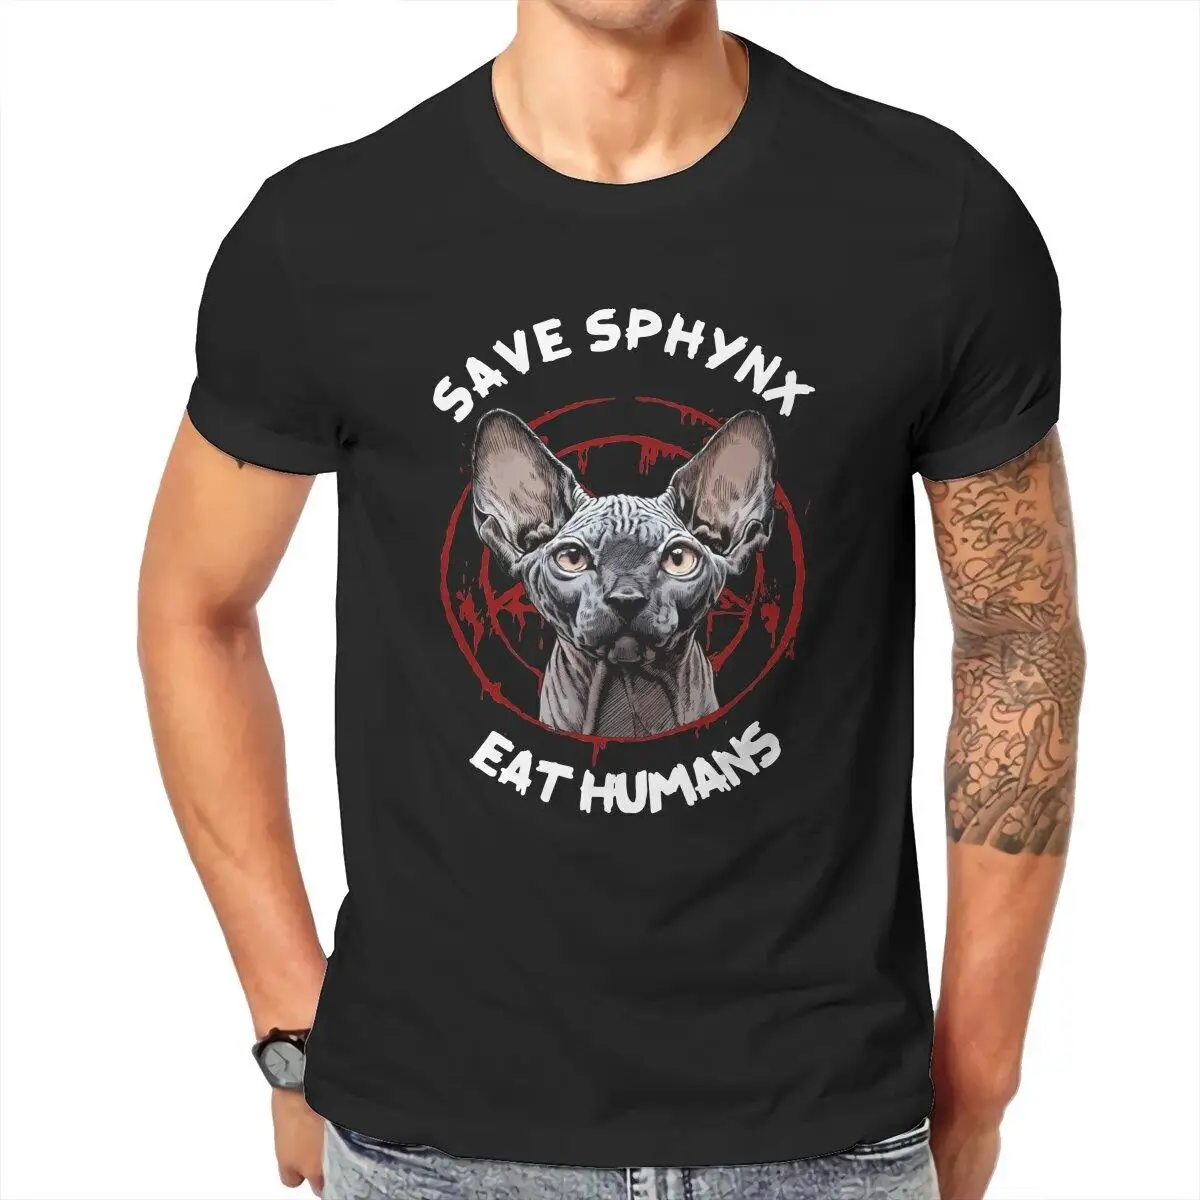 Cool Save Sphynx Eat Human  T-Shirt for Men Round Neck Cotton T Shirts Satan Metal Cat Short Sleeve Tees Gift Idea Tops